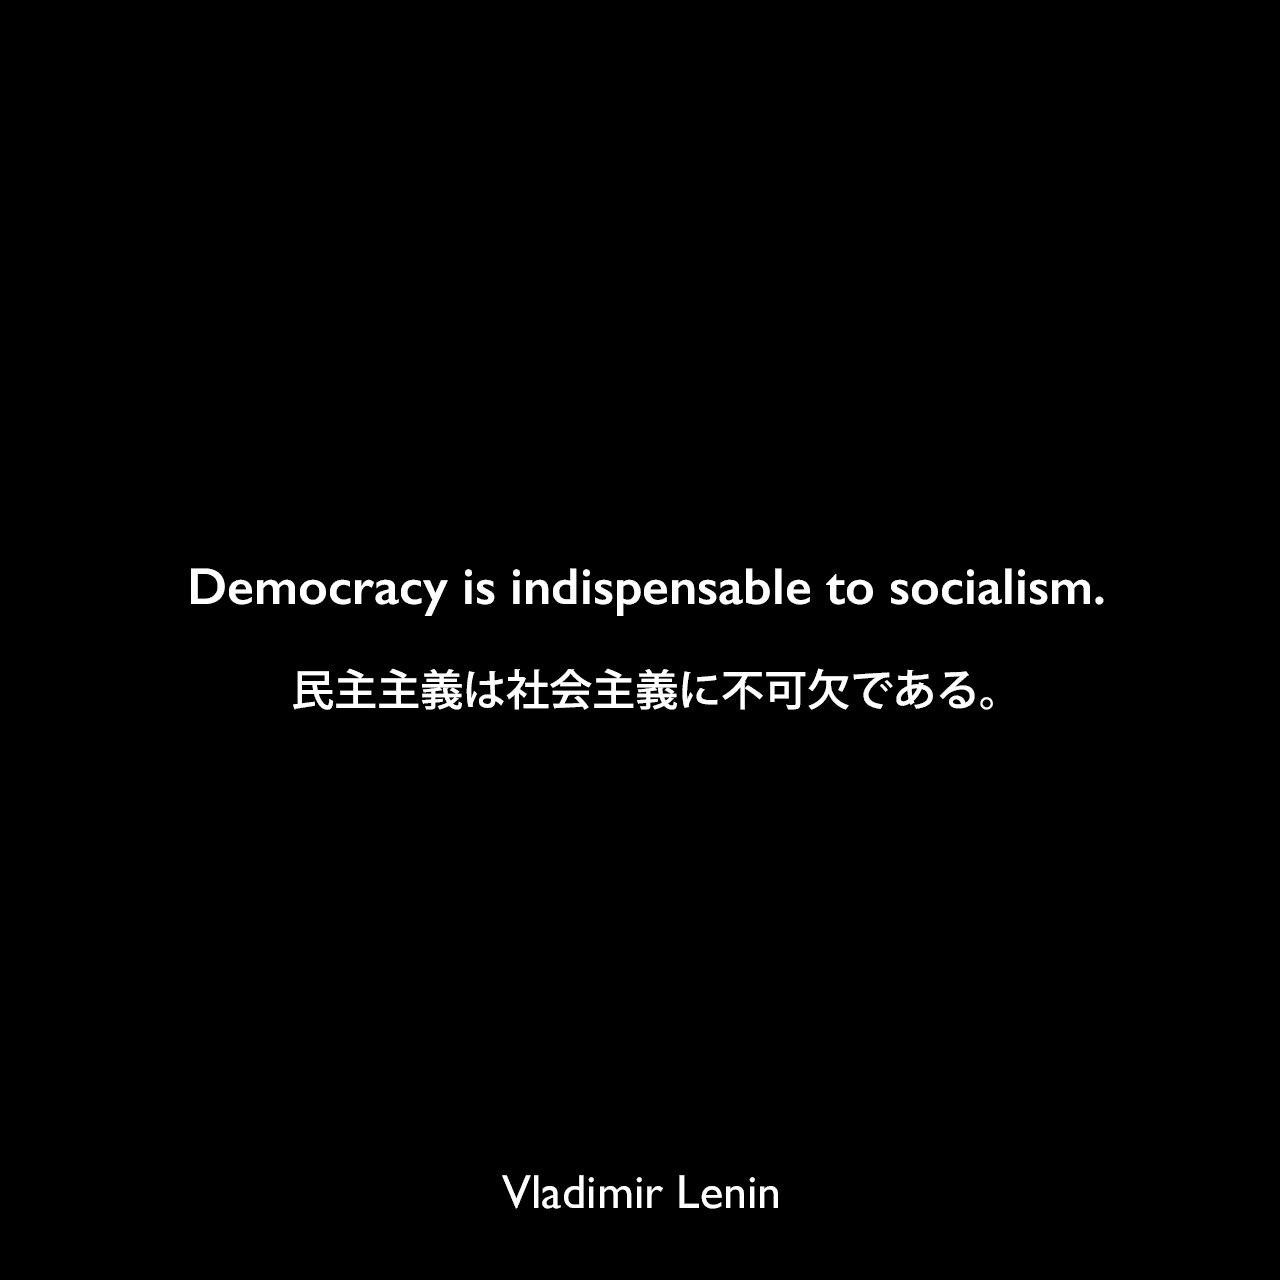 Democracy is indispensable to socialism.民主主義は社会主義に不可欠である。Vladimir Lenin